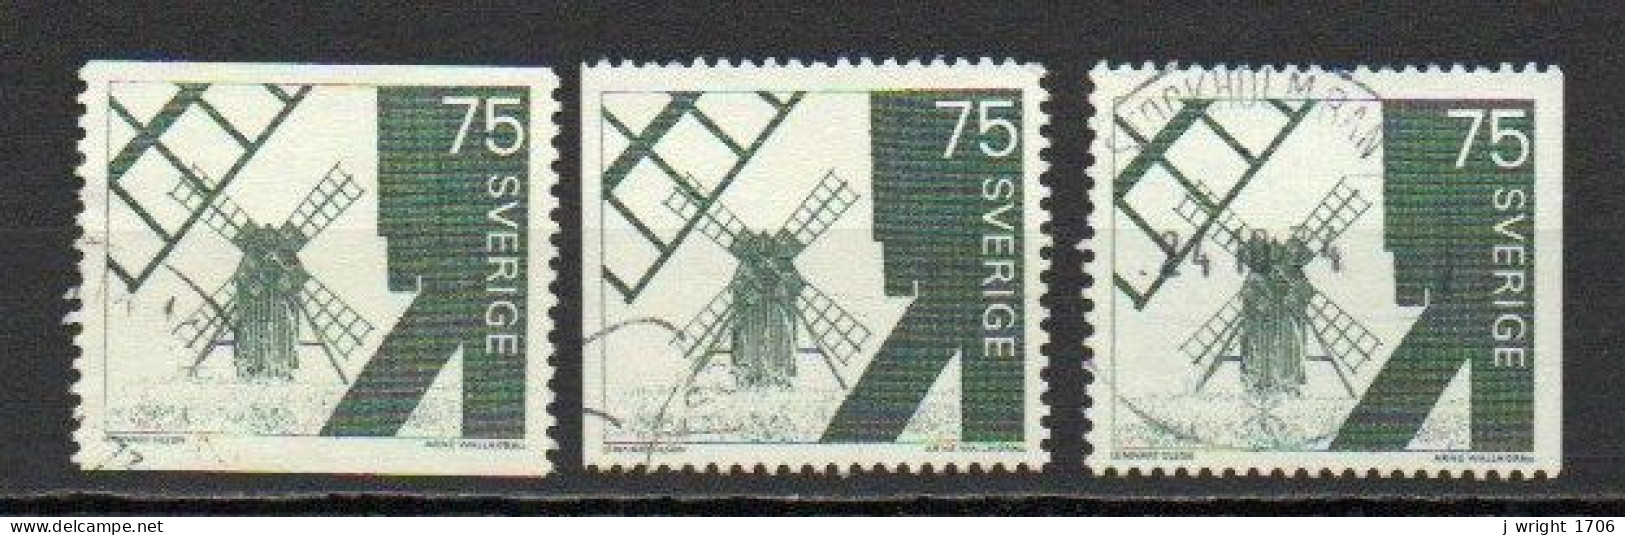 Sweden, 1971, Windmill Ölana Island, 75ö, USED - Gebraucht